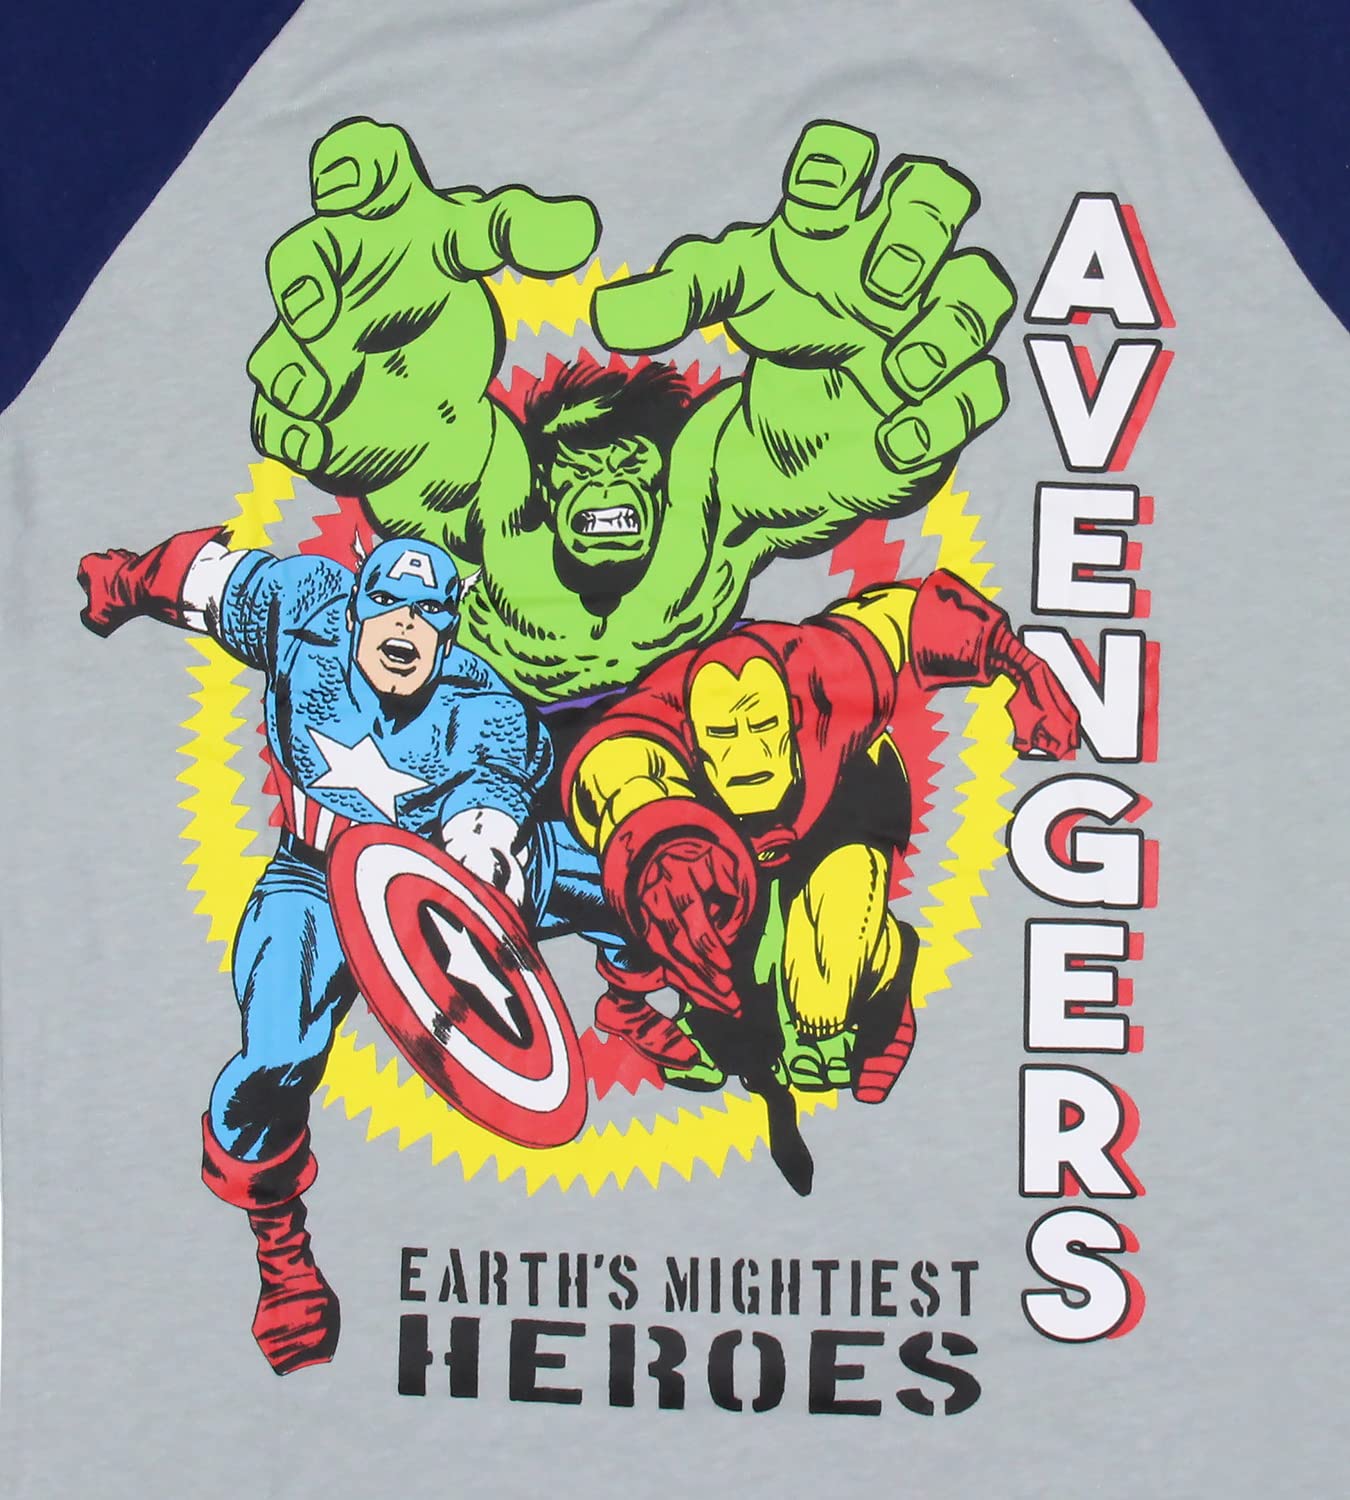 Marvel Avengers Boys' Hulk Iron Man Captain America Superhero Jersey Double Striped T-Shirt Tee